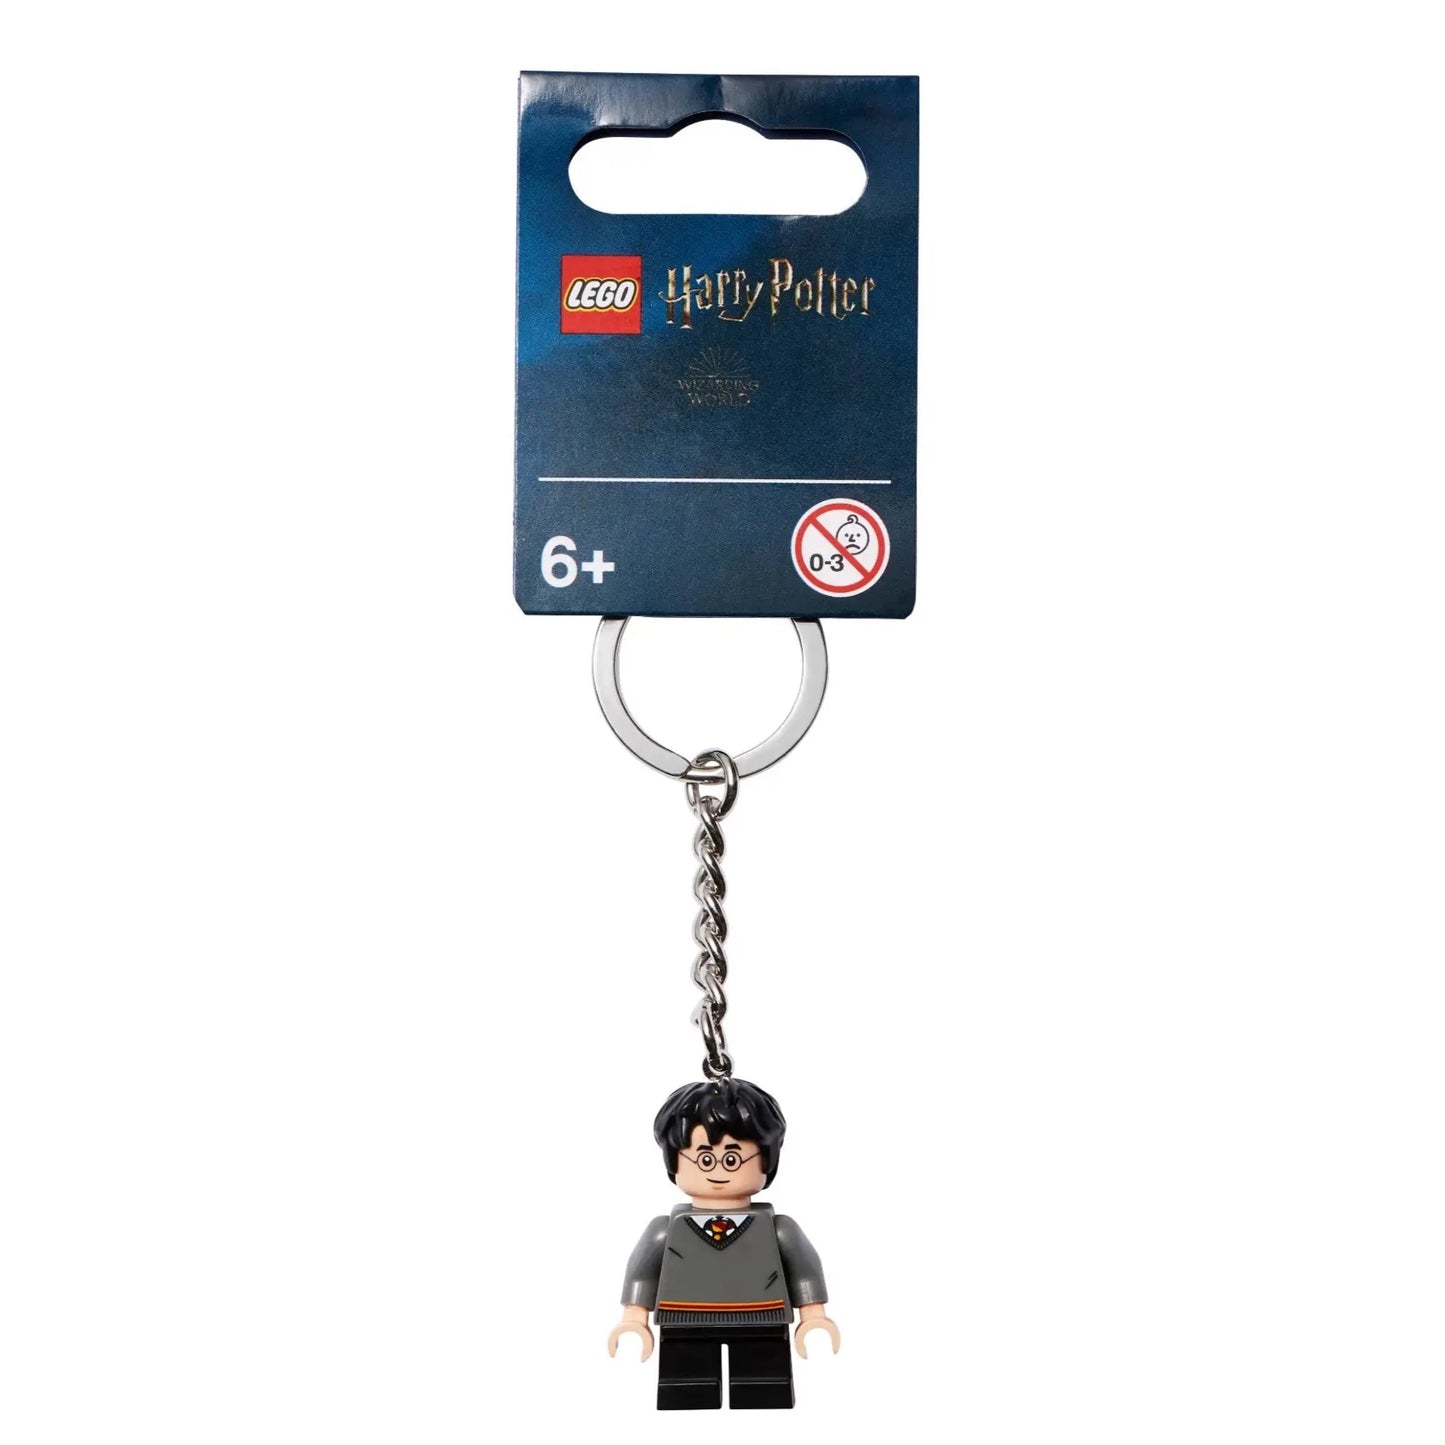 LEGO® Harry Potter Key chain